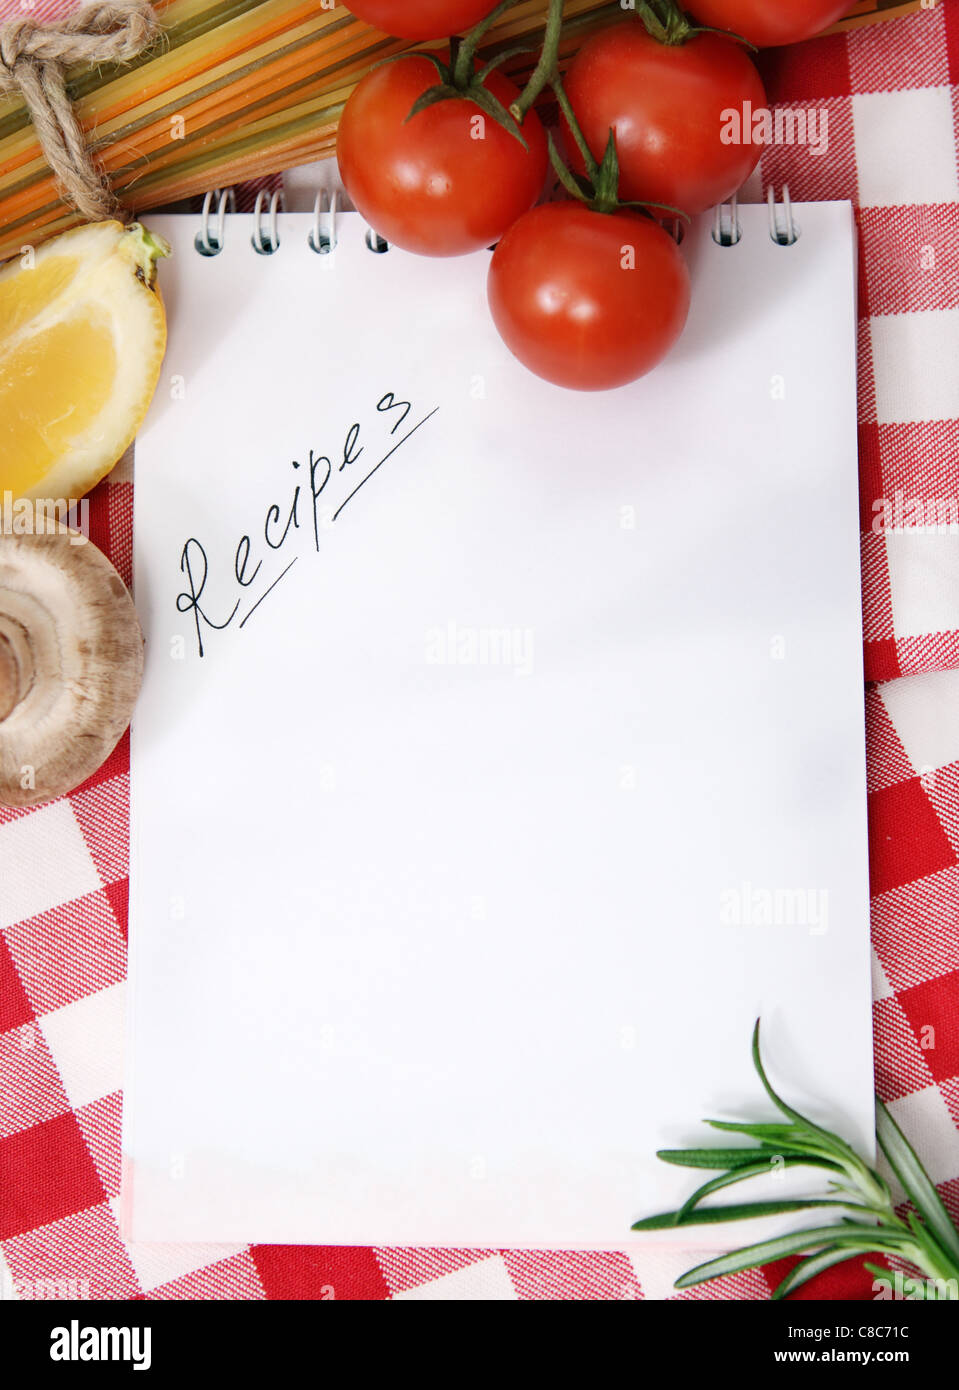 Bodegón con verduras recetas en blanco sobre fondo cuadriculado Foto de stock